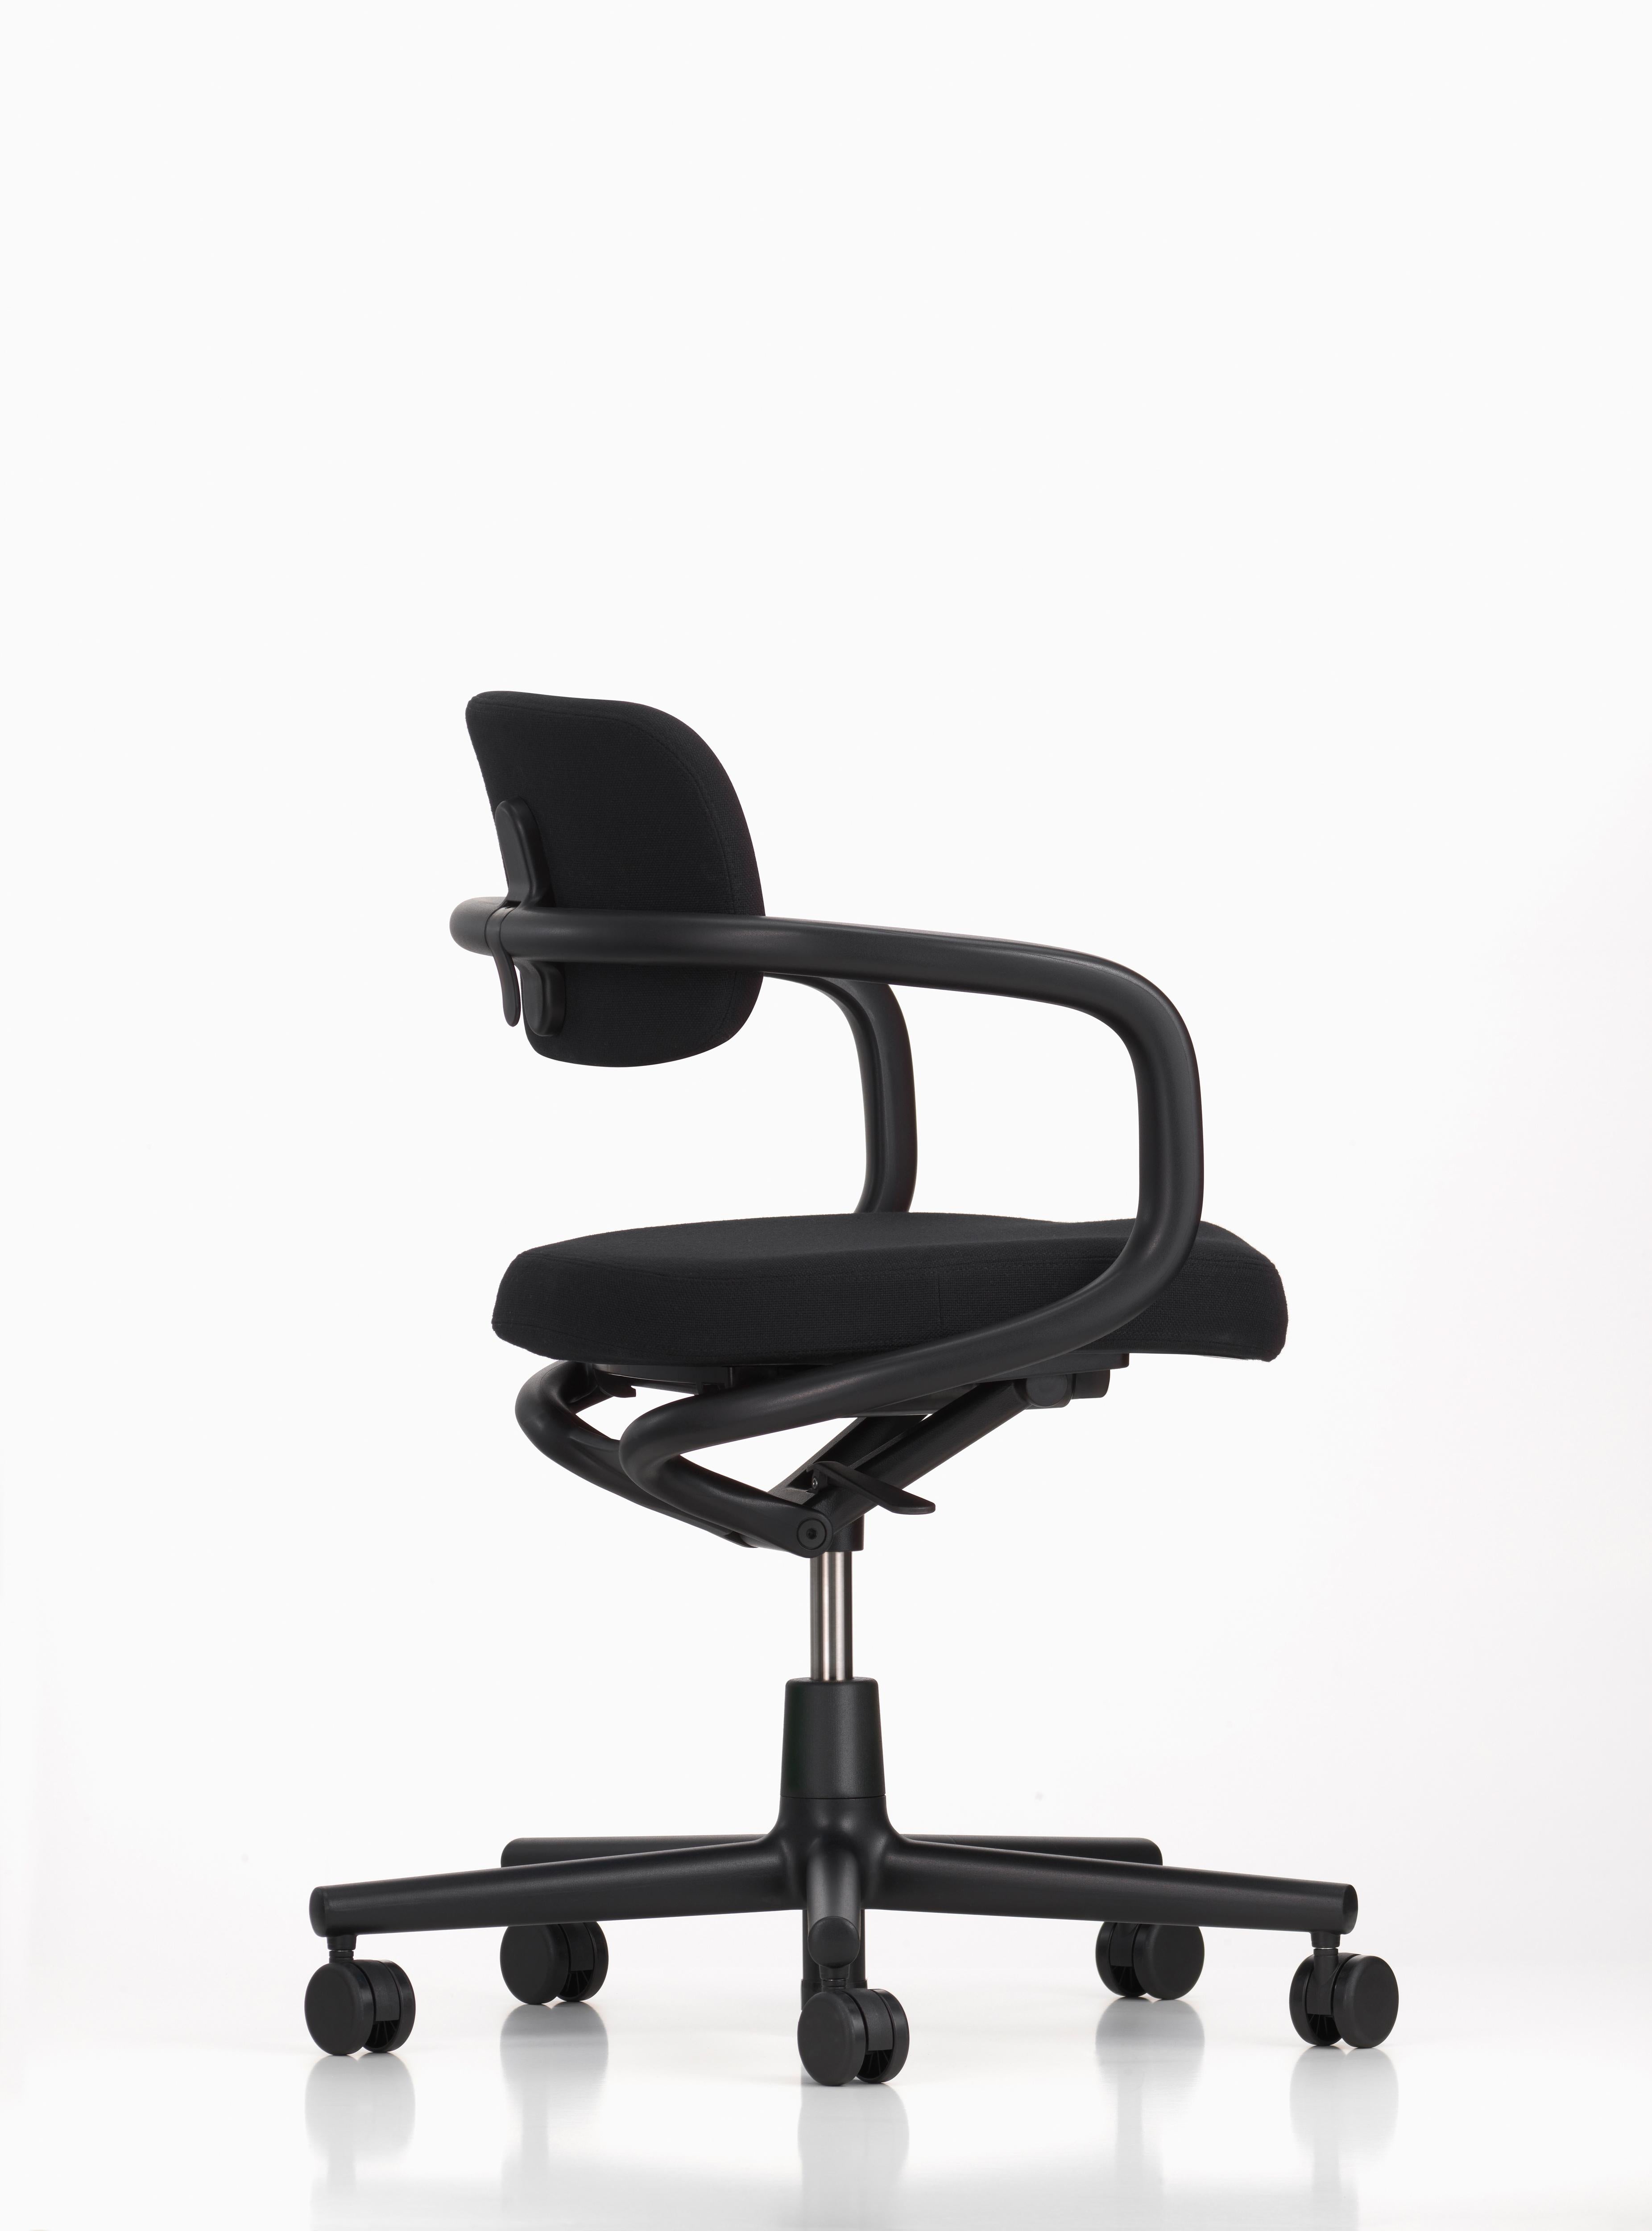 Modern Vitra Allstar Chair in Nero Hopsak by Konstantin Grcic For Sale